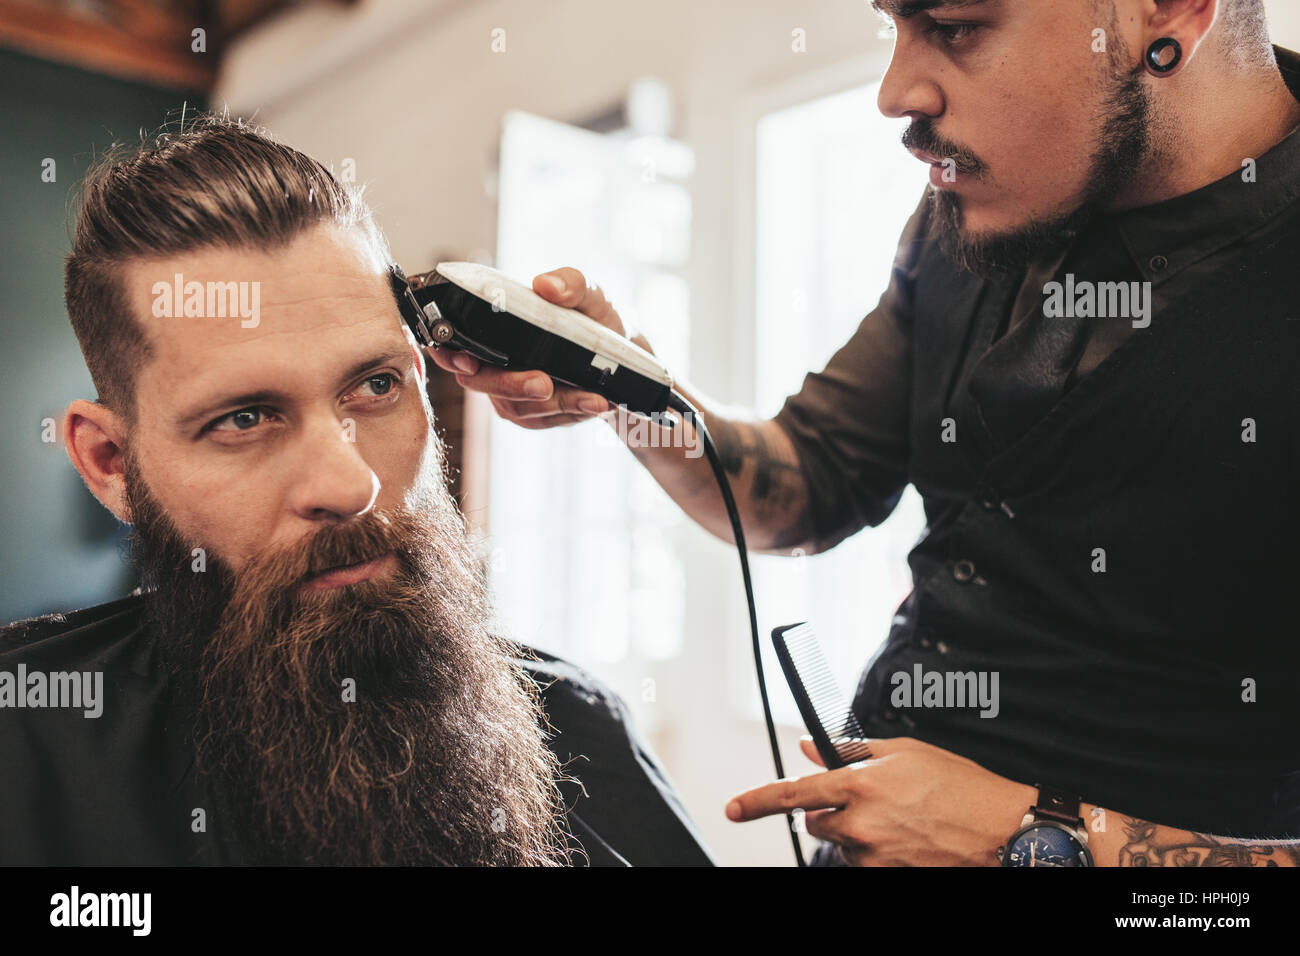 Corte de pelo para hombre fotografías e imágenes de alta resolución - Alamy